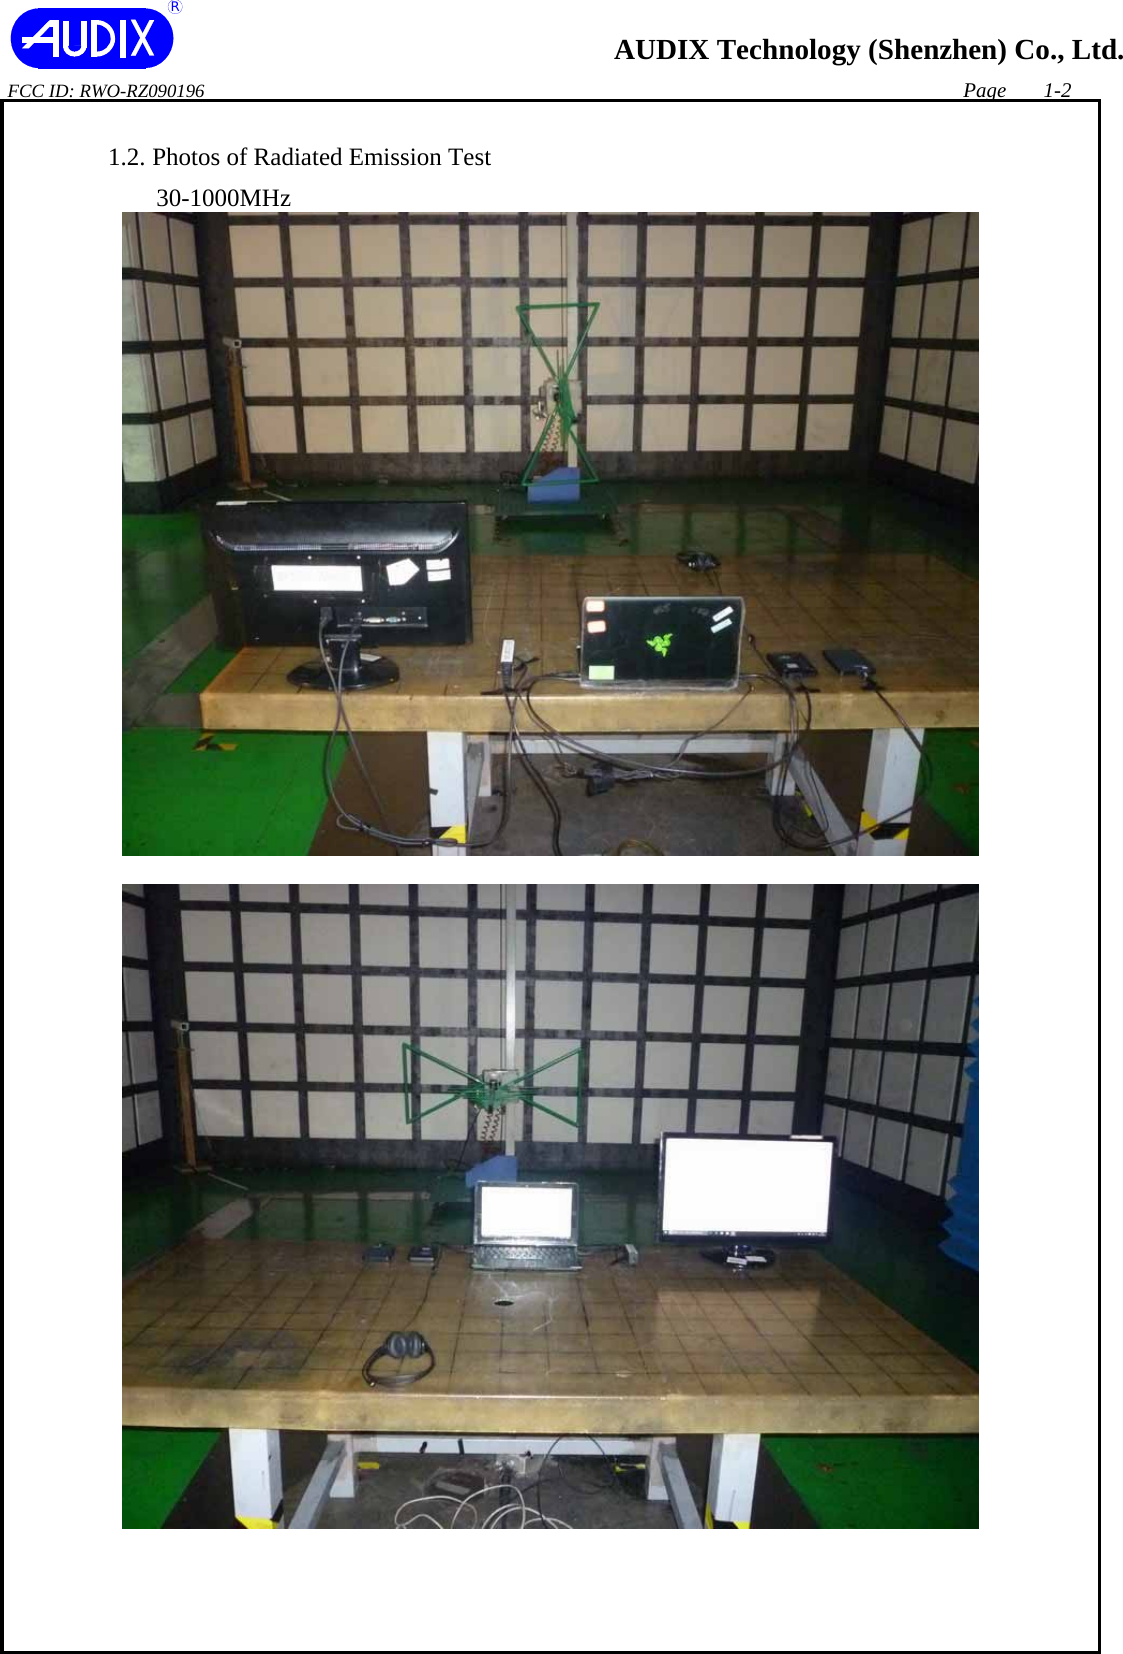 R AUDIX Technology (Shenzhen) Co., Ltd.FCC ID: RWO-RZ090196                                                                Page      1-2 1.2. Photos of Radiated Emission Test   30-1000MHz    